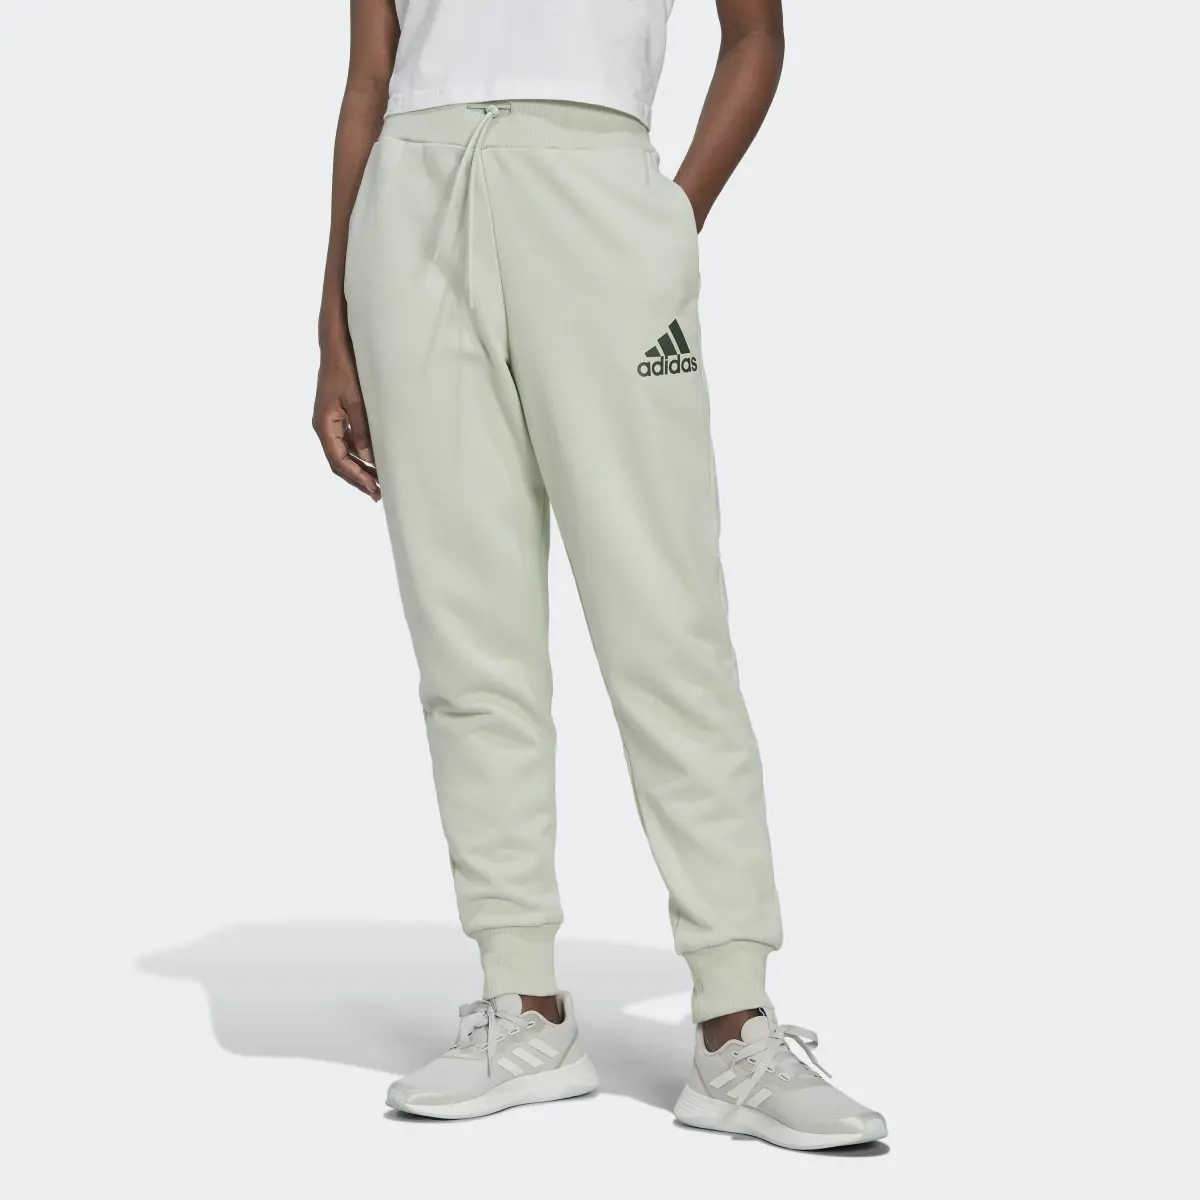 Adidas Essentials Multi-Colored Logo Pants. 1